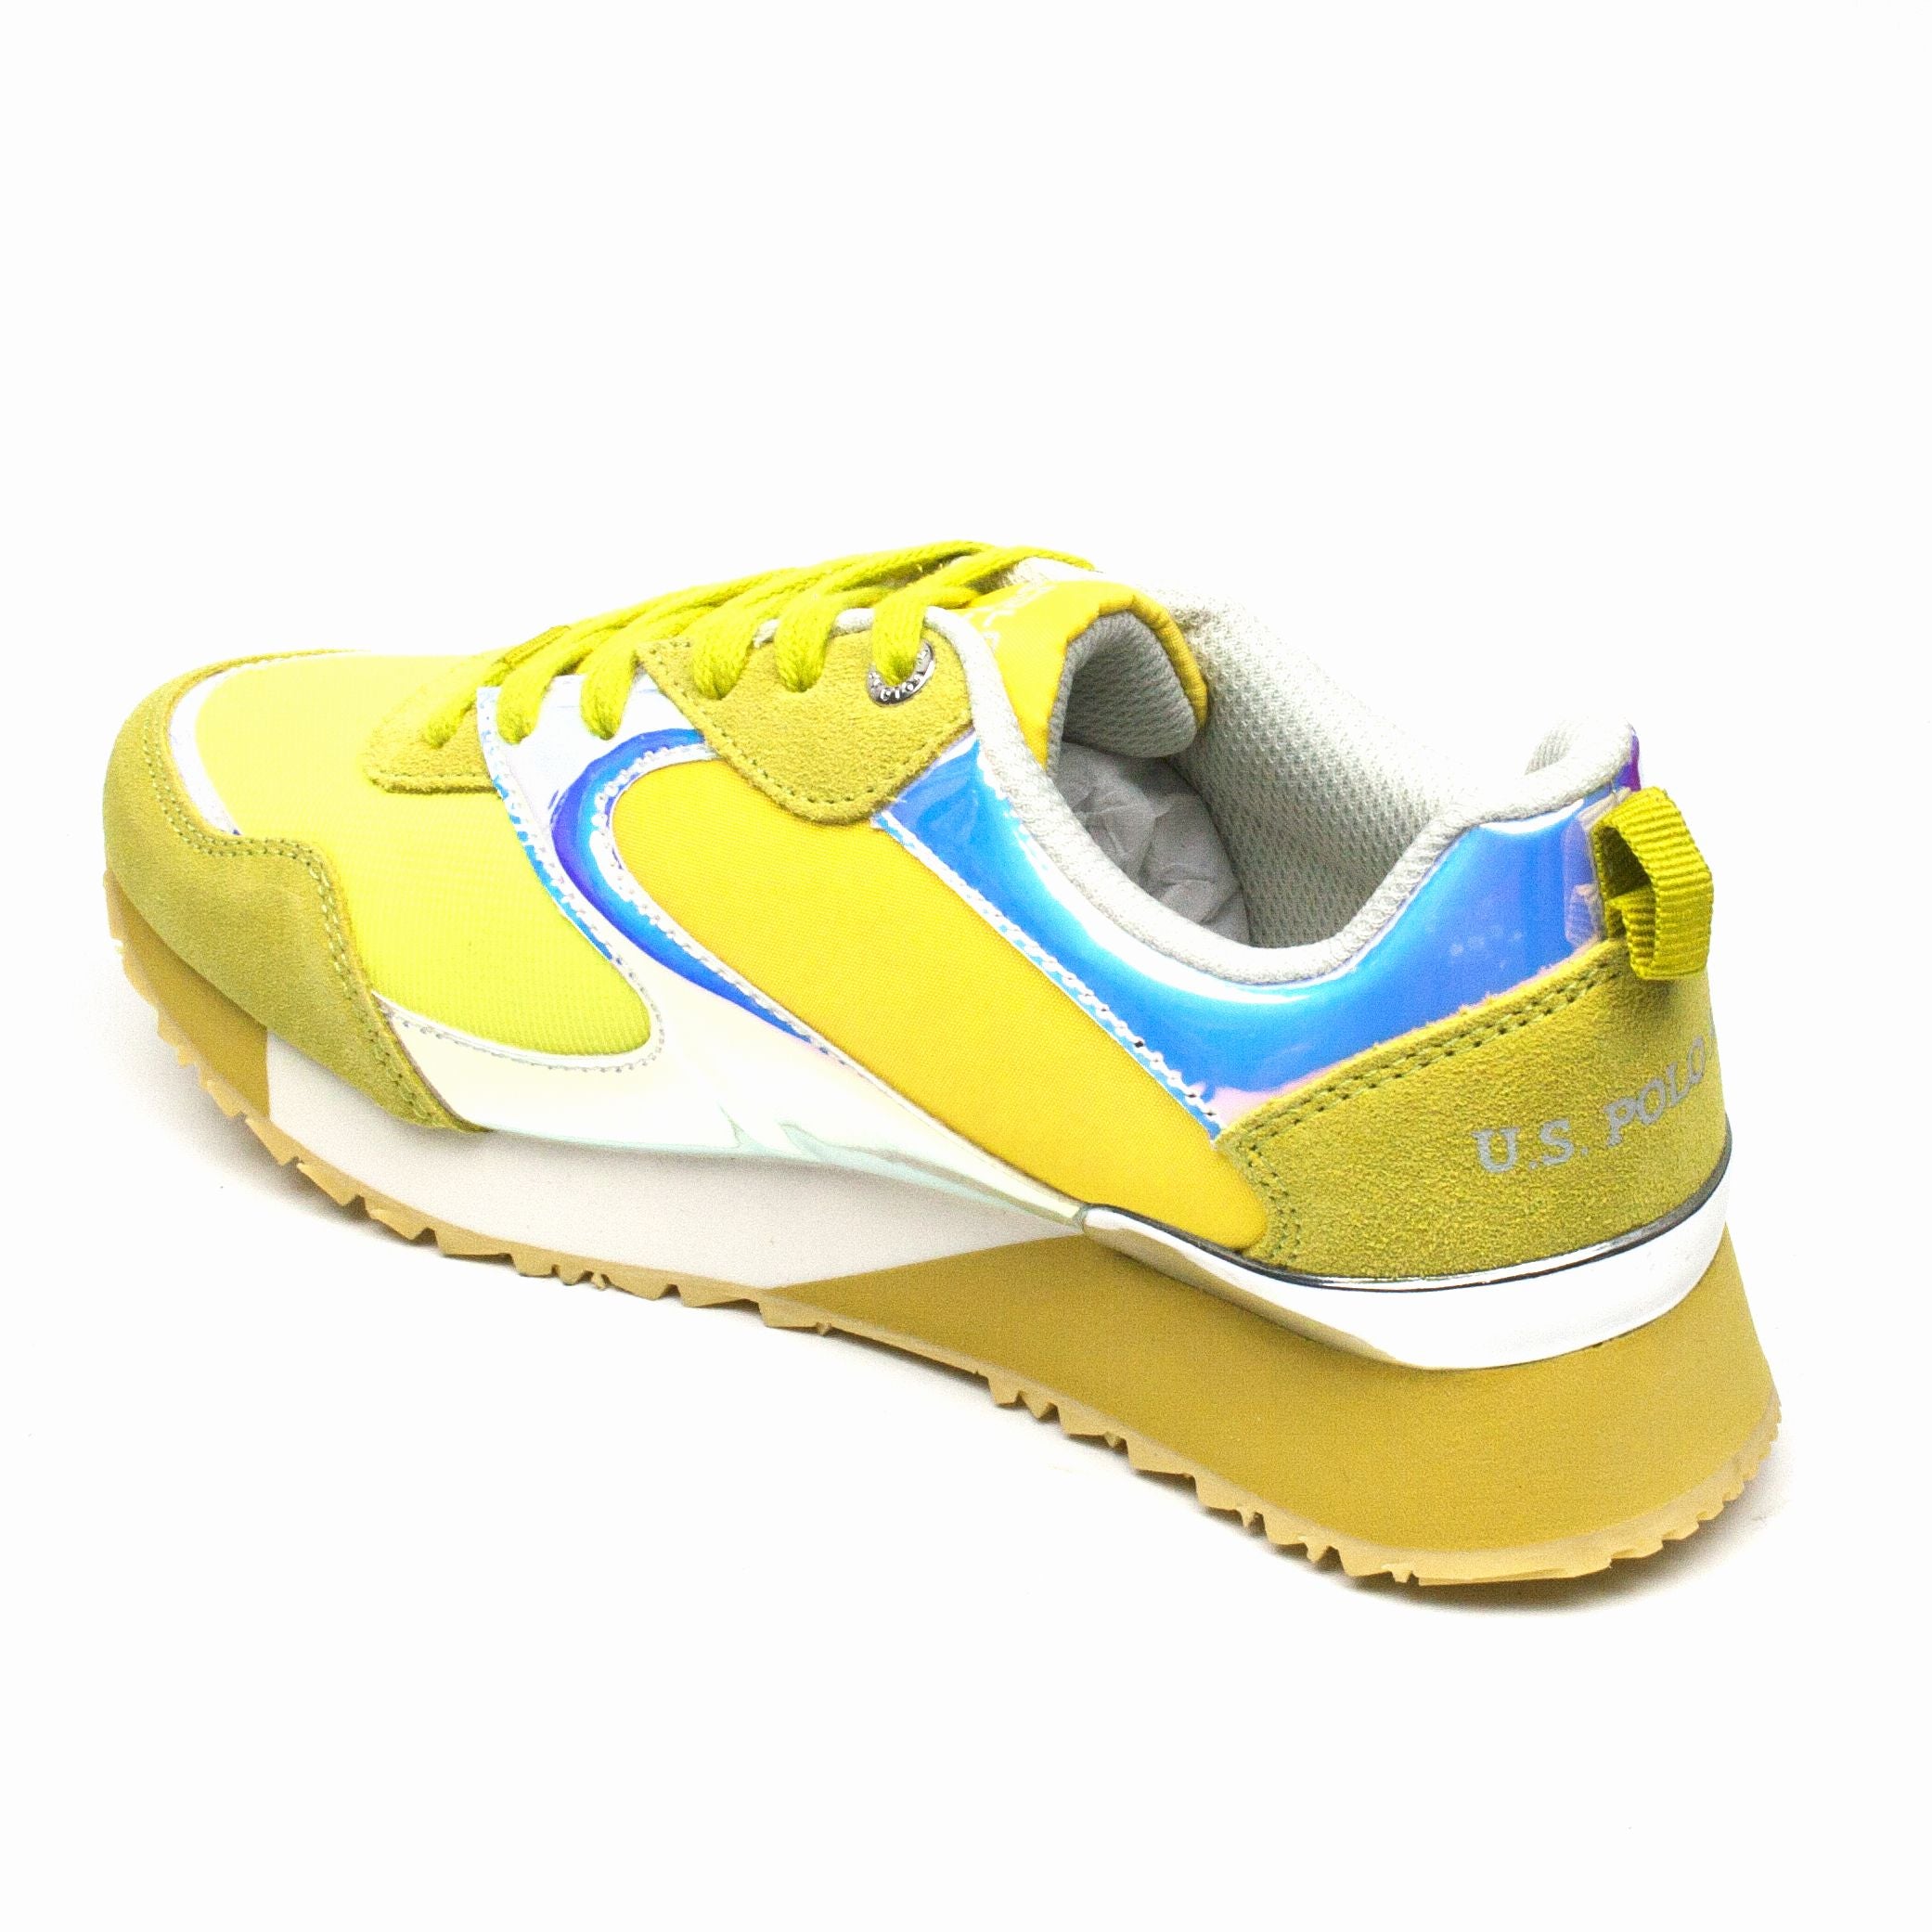 Polo pantofi dama sport Sneakers Verona1 galben ID2041-GLB